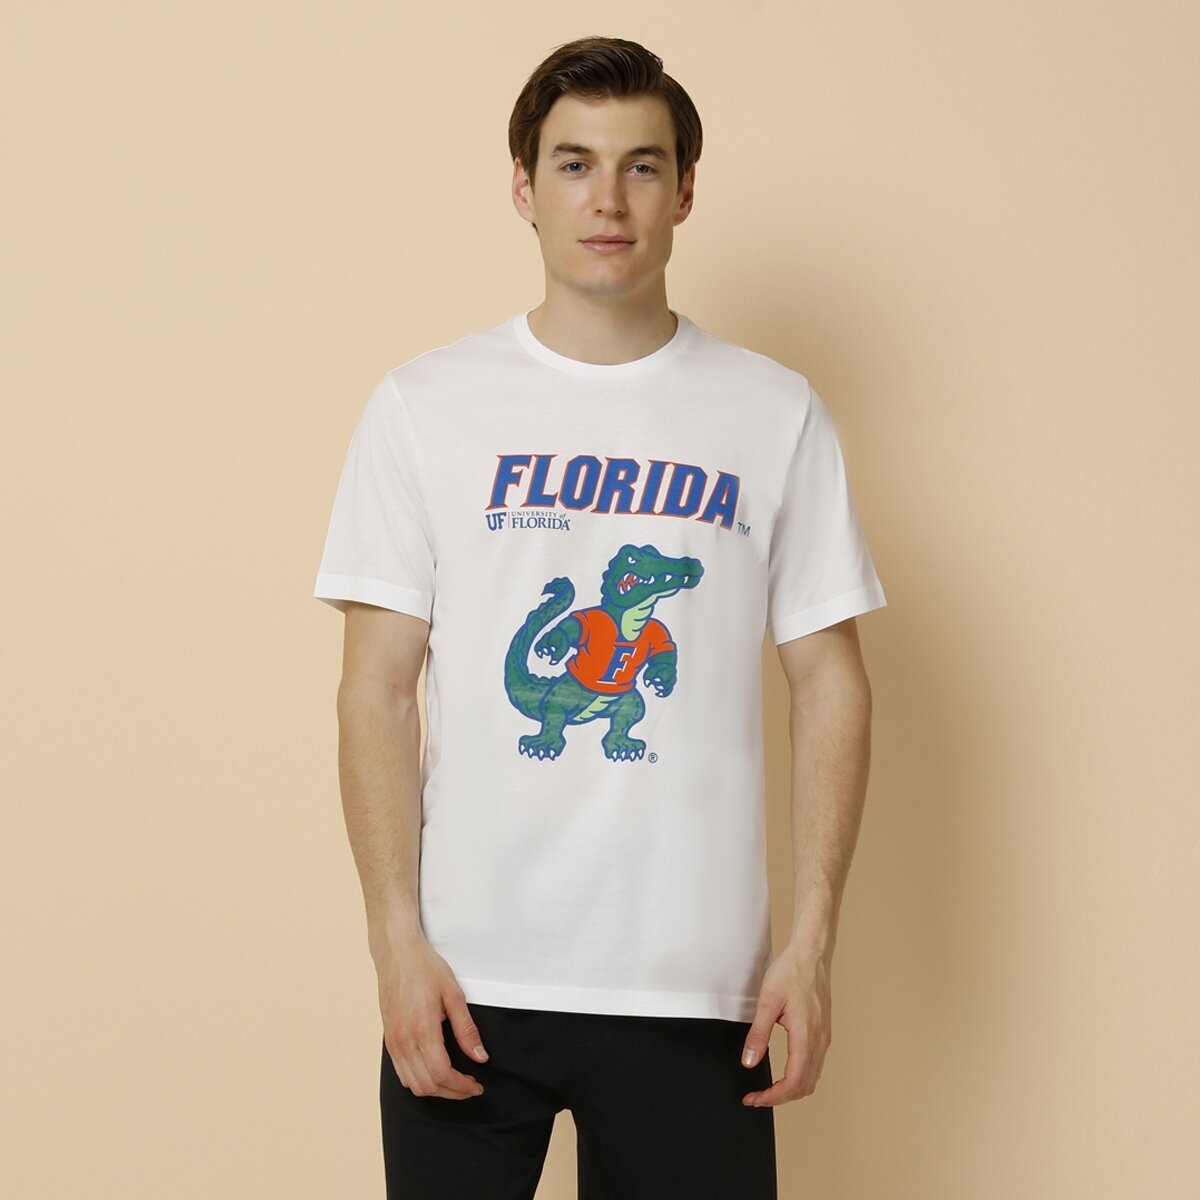 Flo SN686 FLORIDA T-SHIRT BEYAZ Erkek Kısa Kol T-Shirt. 1